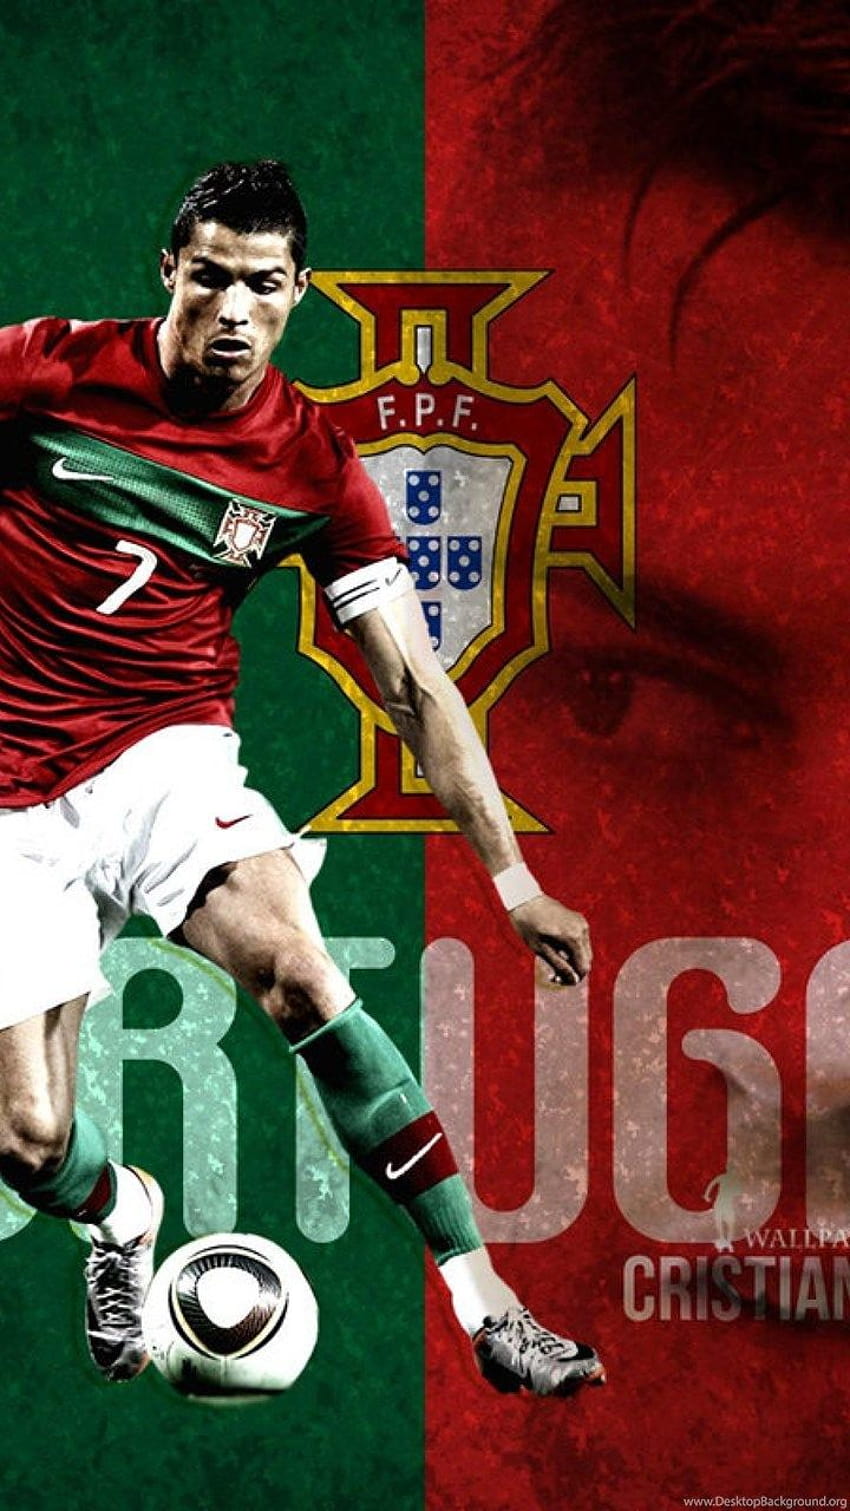 48+] Cristiano Ronaldo Wallpaper Portugal - WallpaperSafari